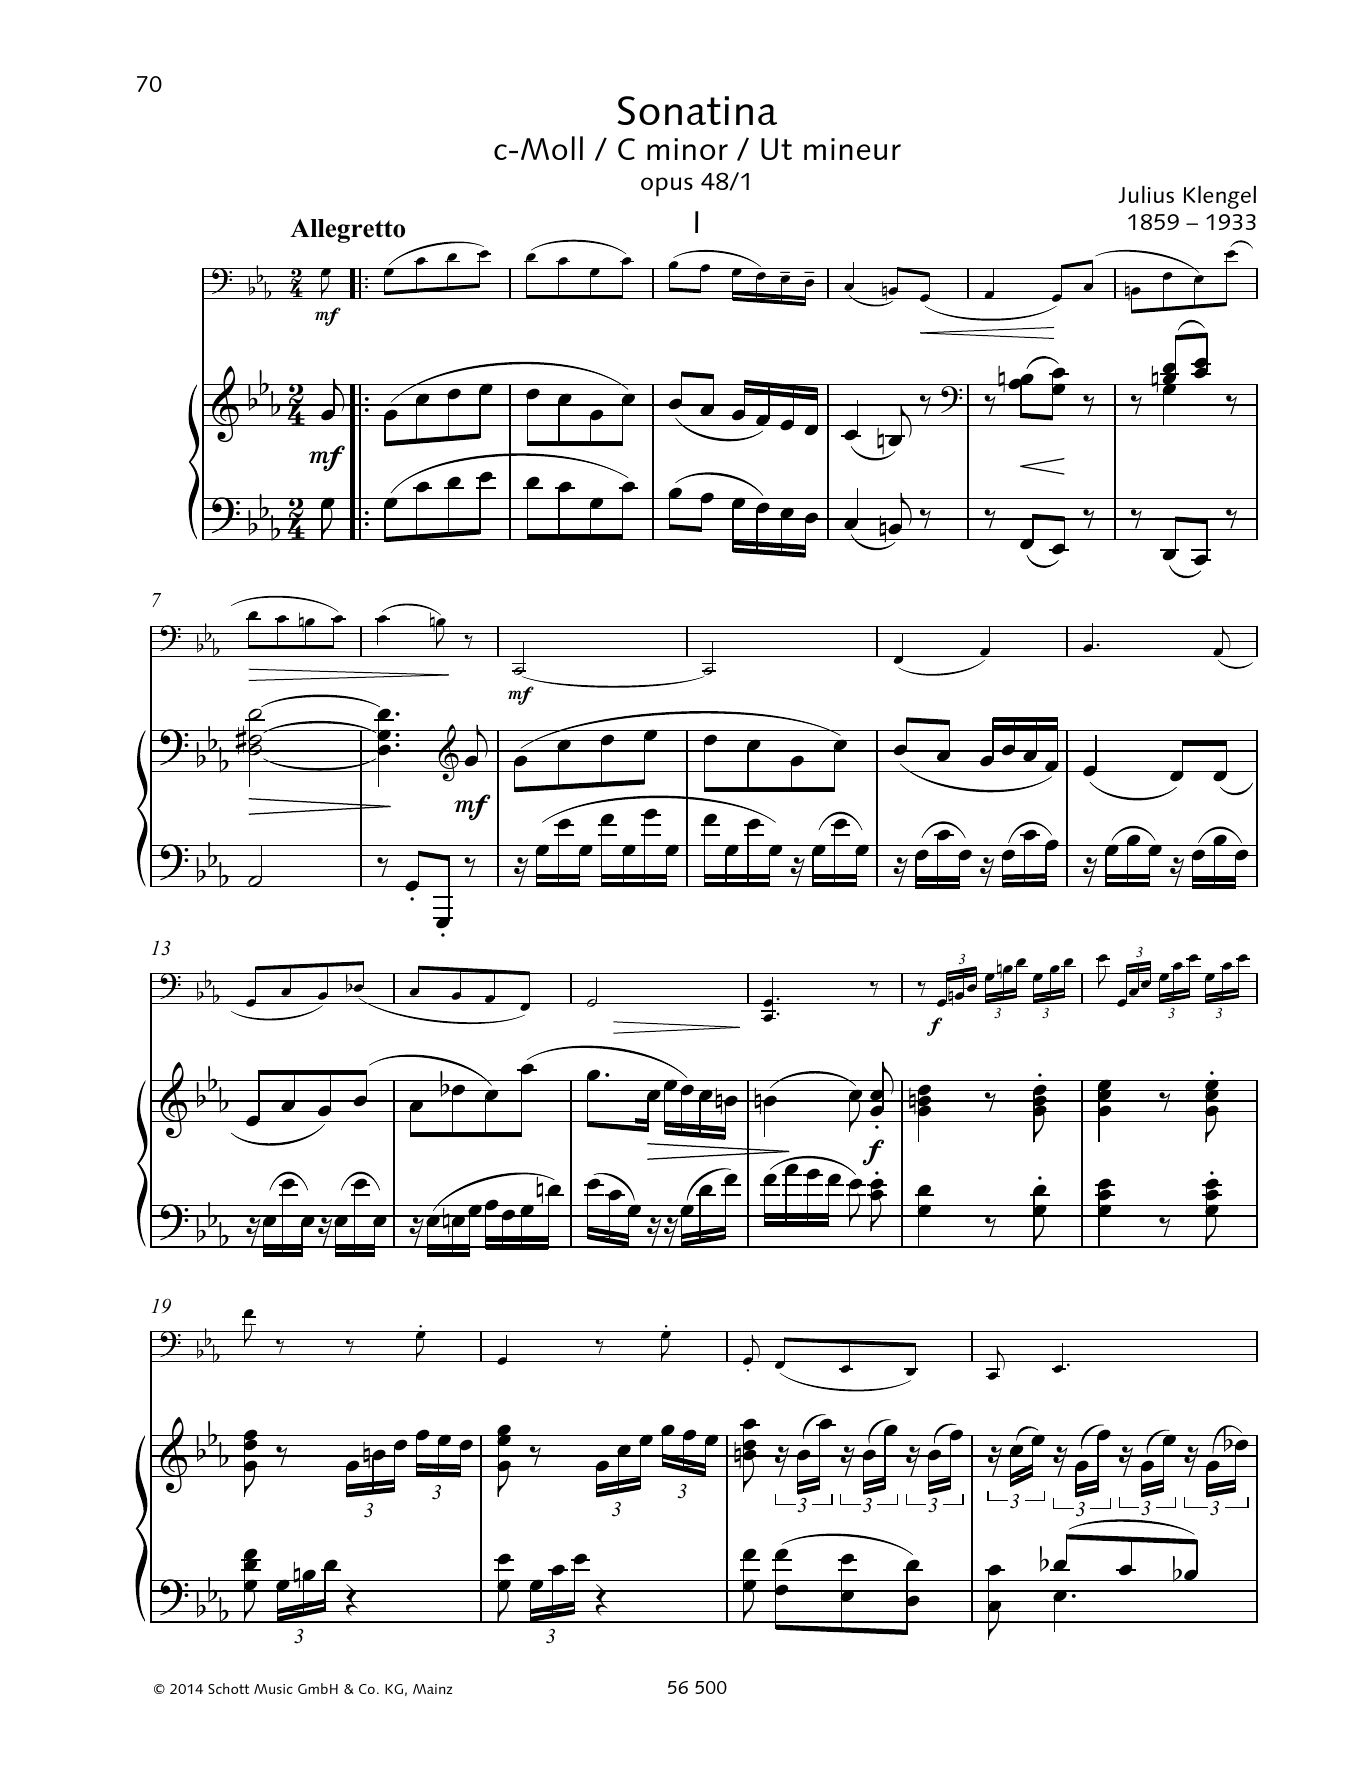 Julius Klengel Sonatina C minor Sheet Music Notes & Chords for String Solo - Download or Print PDF